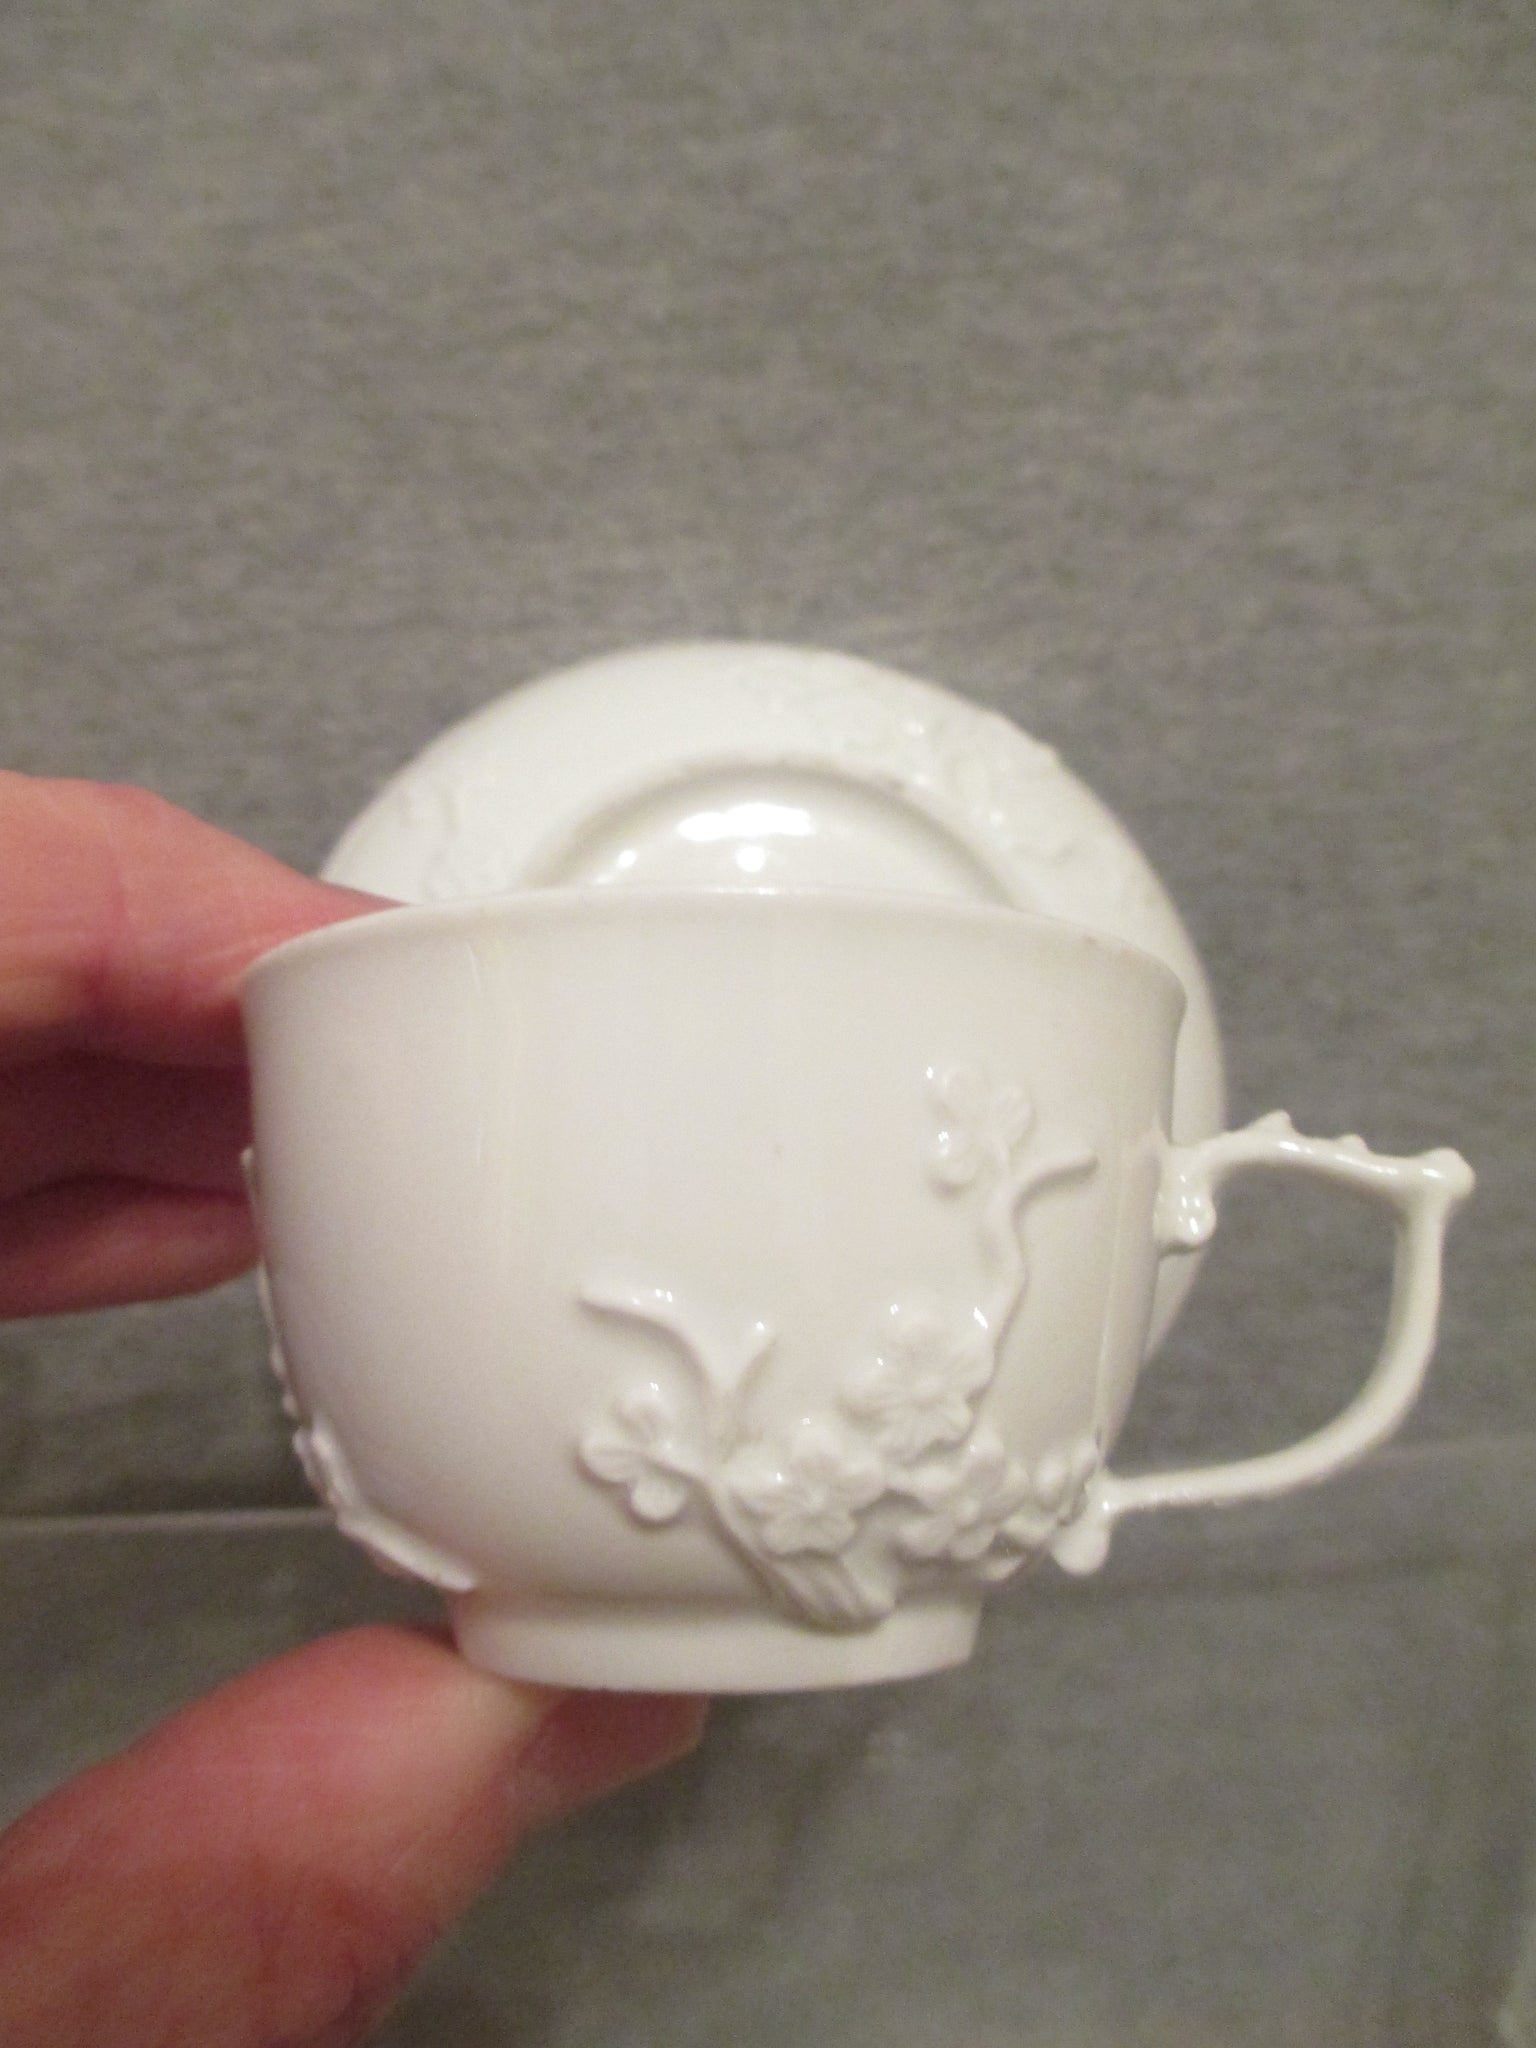 Meissen Porcelain (childs) Blanc de Chine, Prunus Blossom Cup & Saucer 1740's